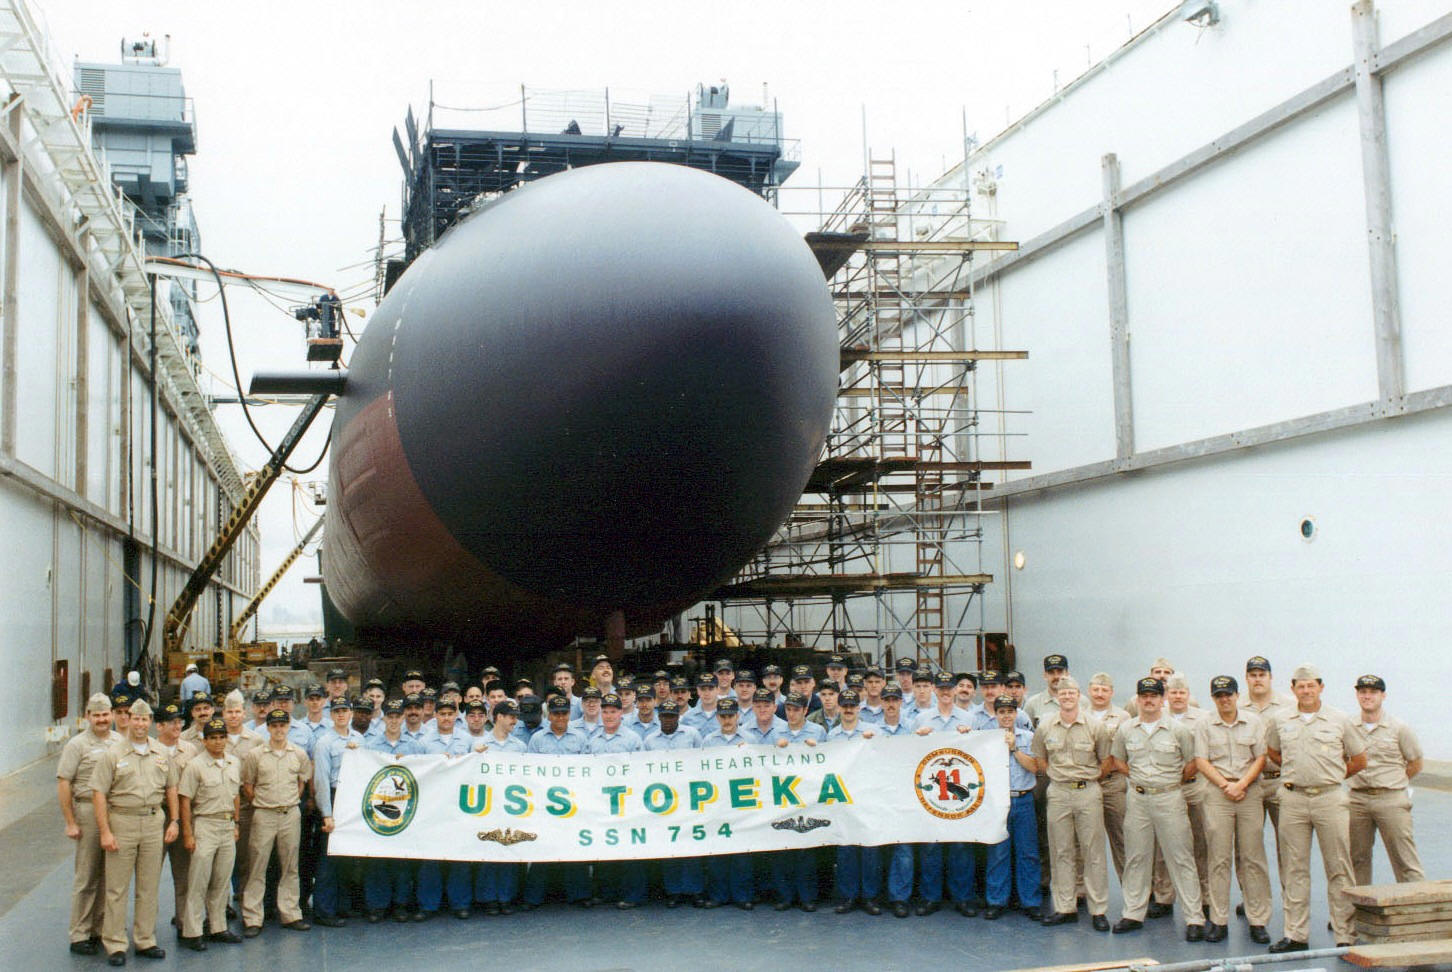 ssn-754 uss topeka dry dock period 1994